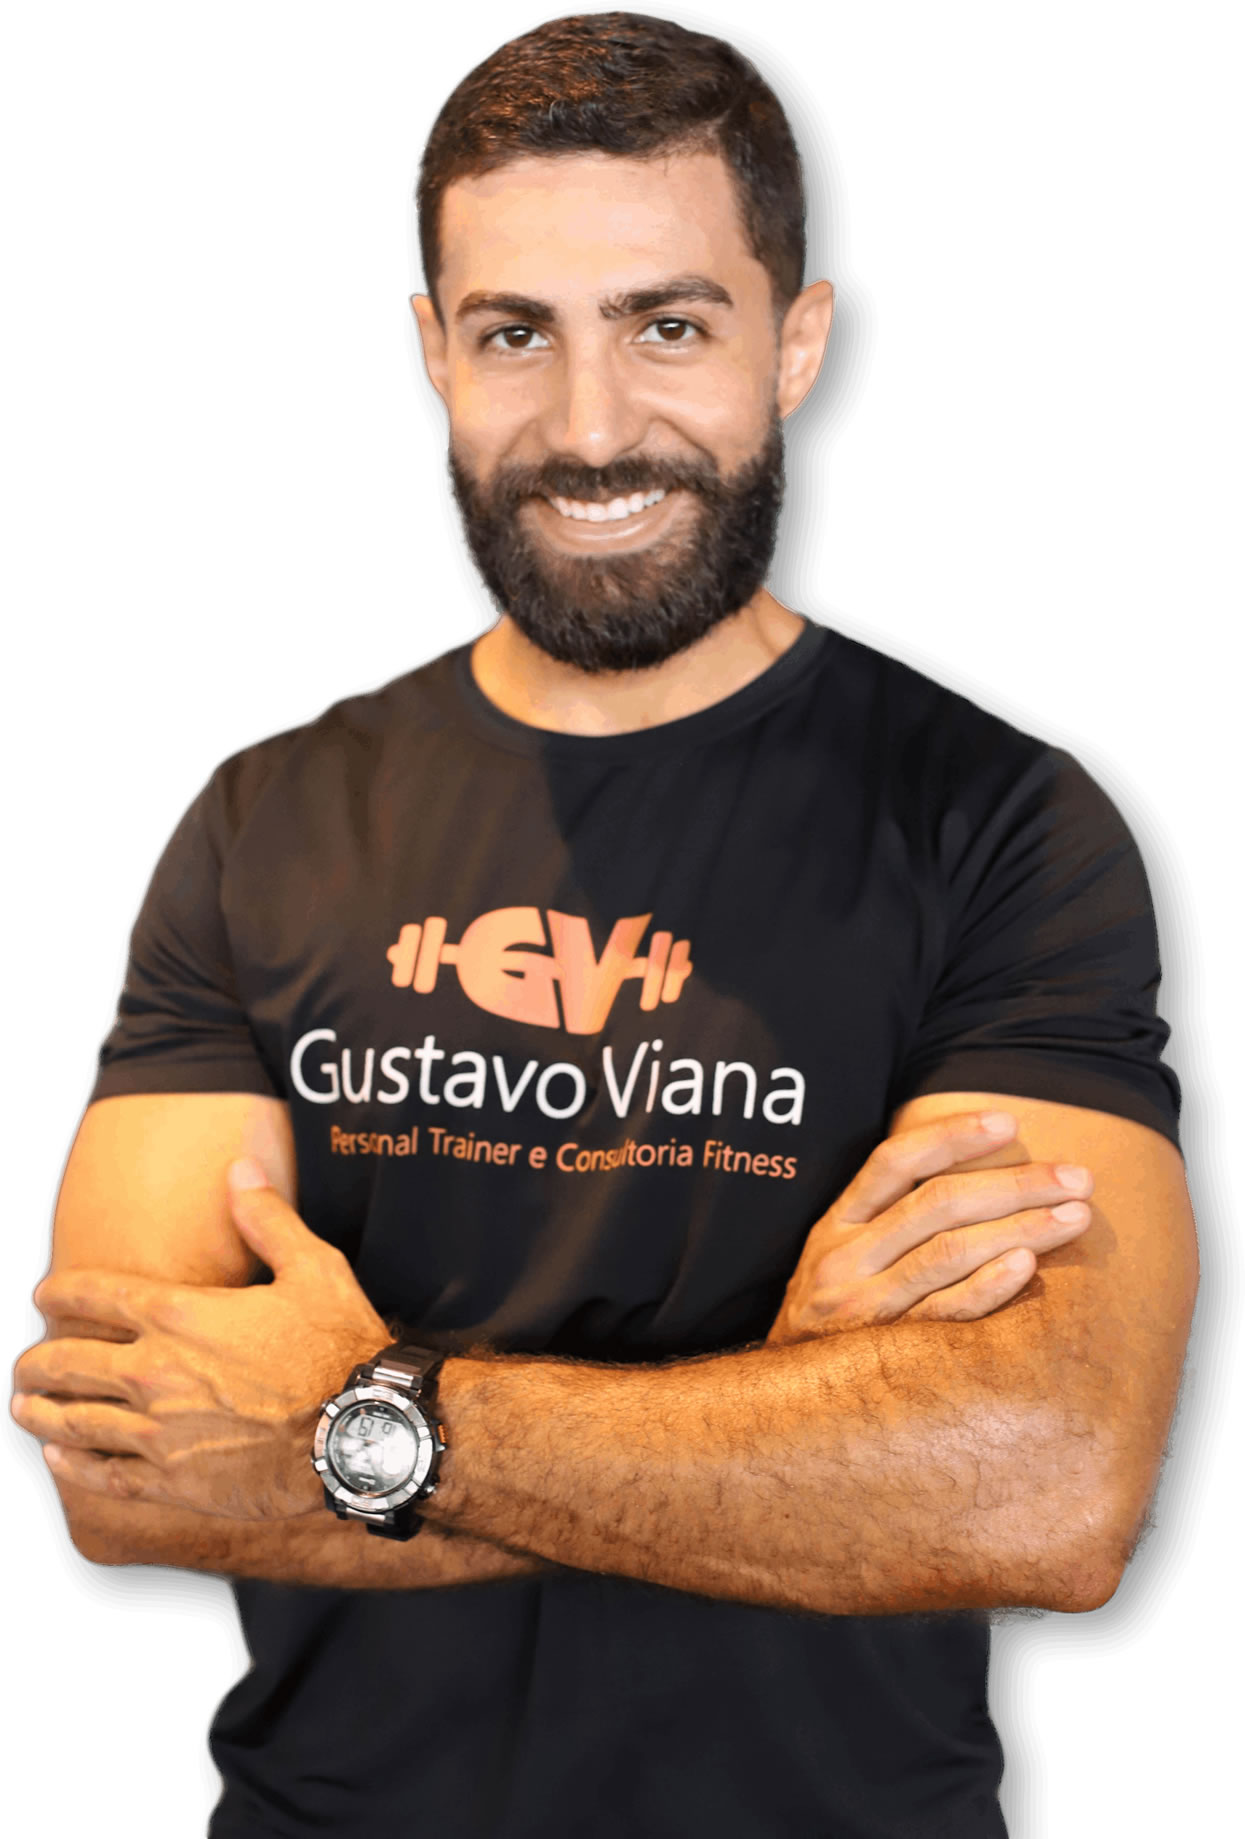 Gustavo Viana personal trainer qual seu objetivo 11